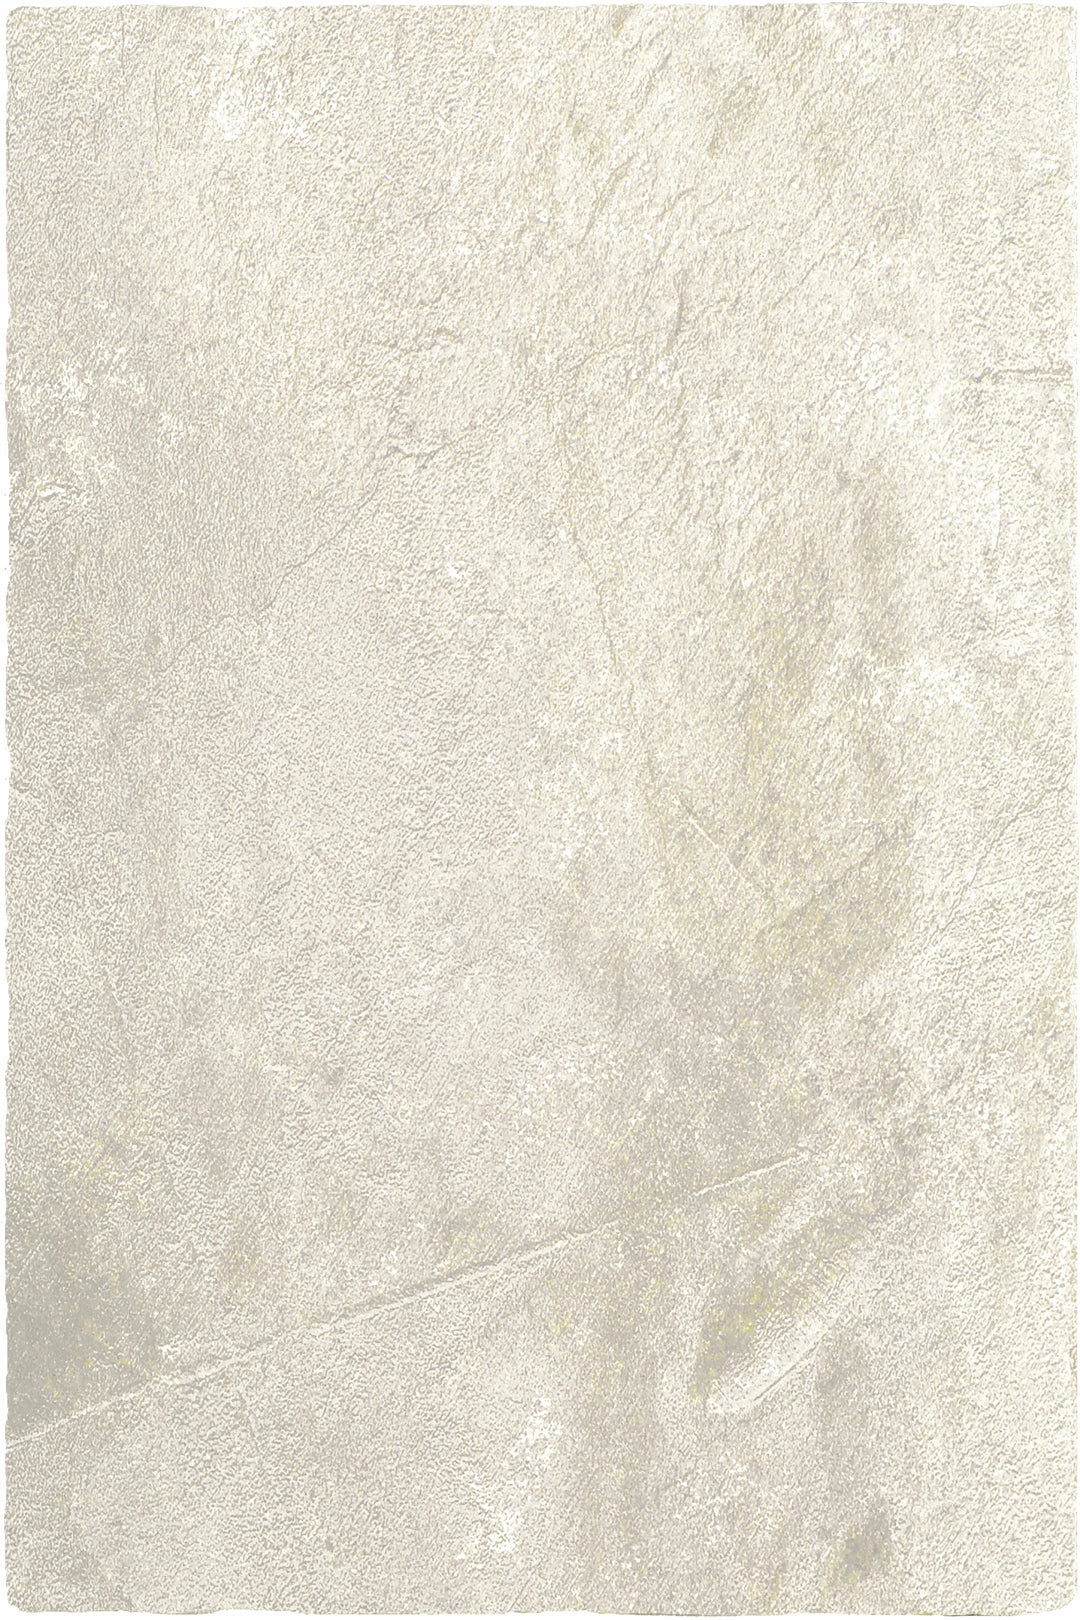 Essential Country Limestone White 50cm x 33cm